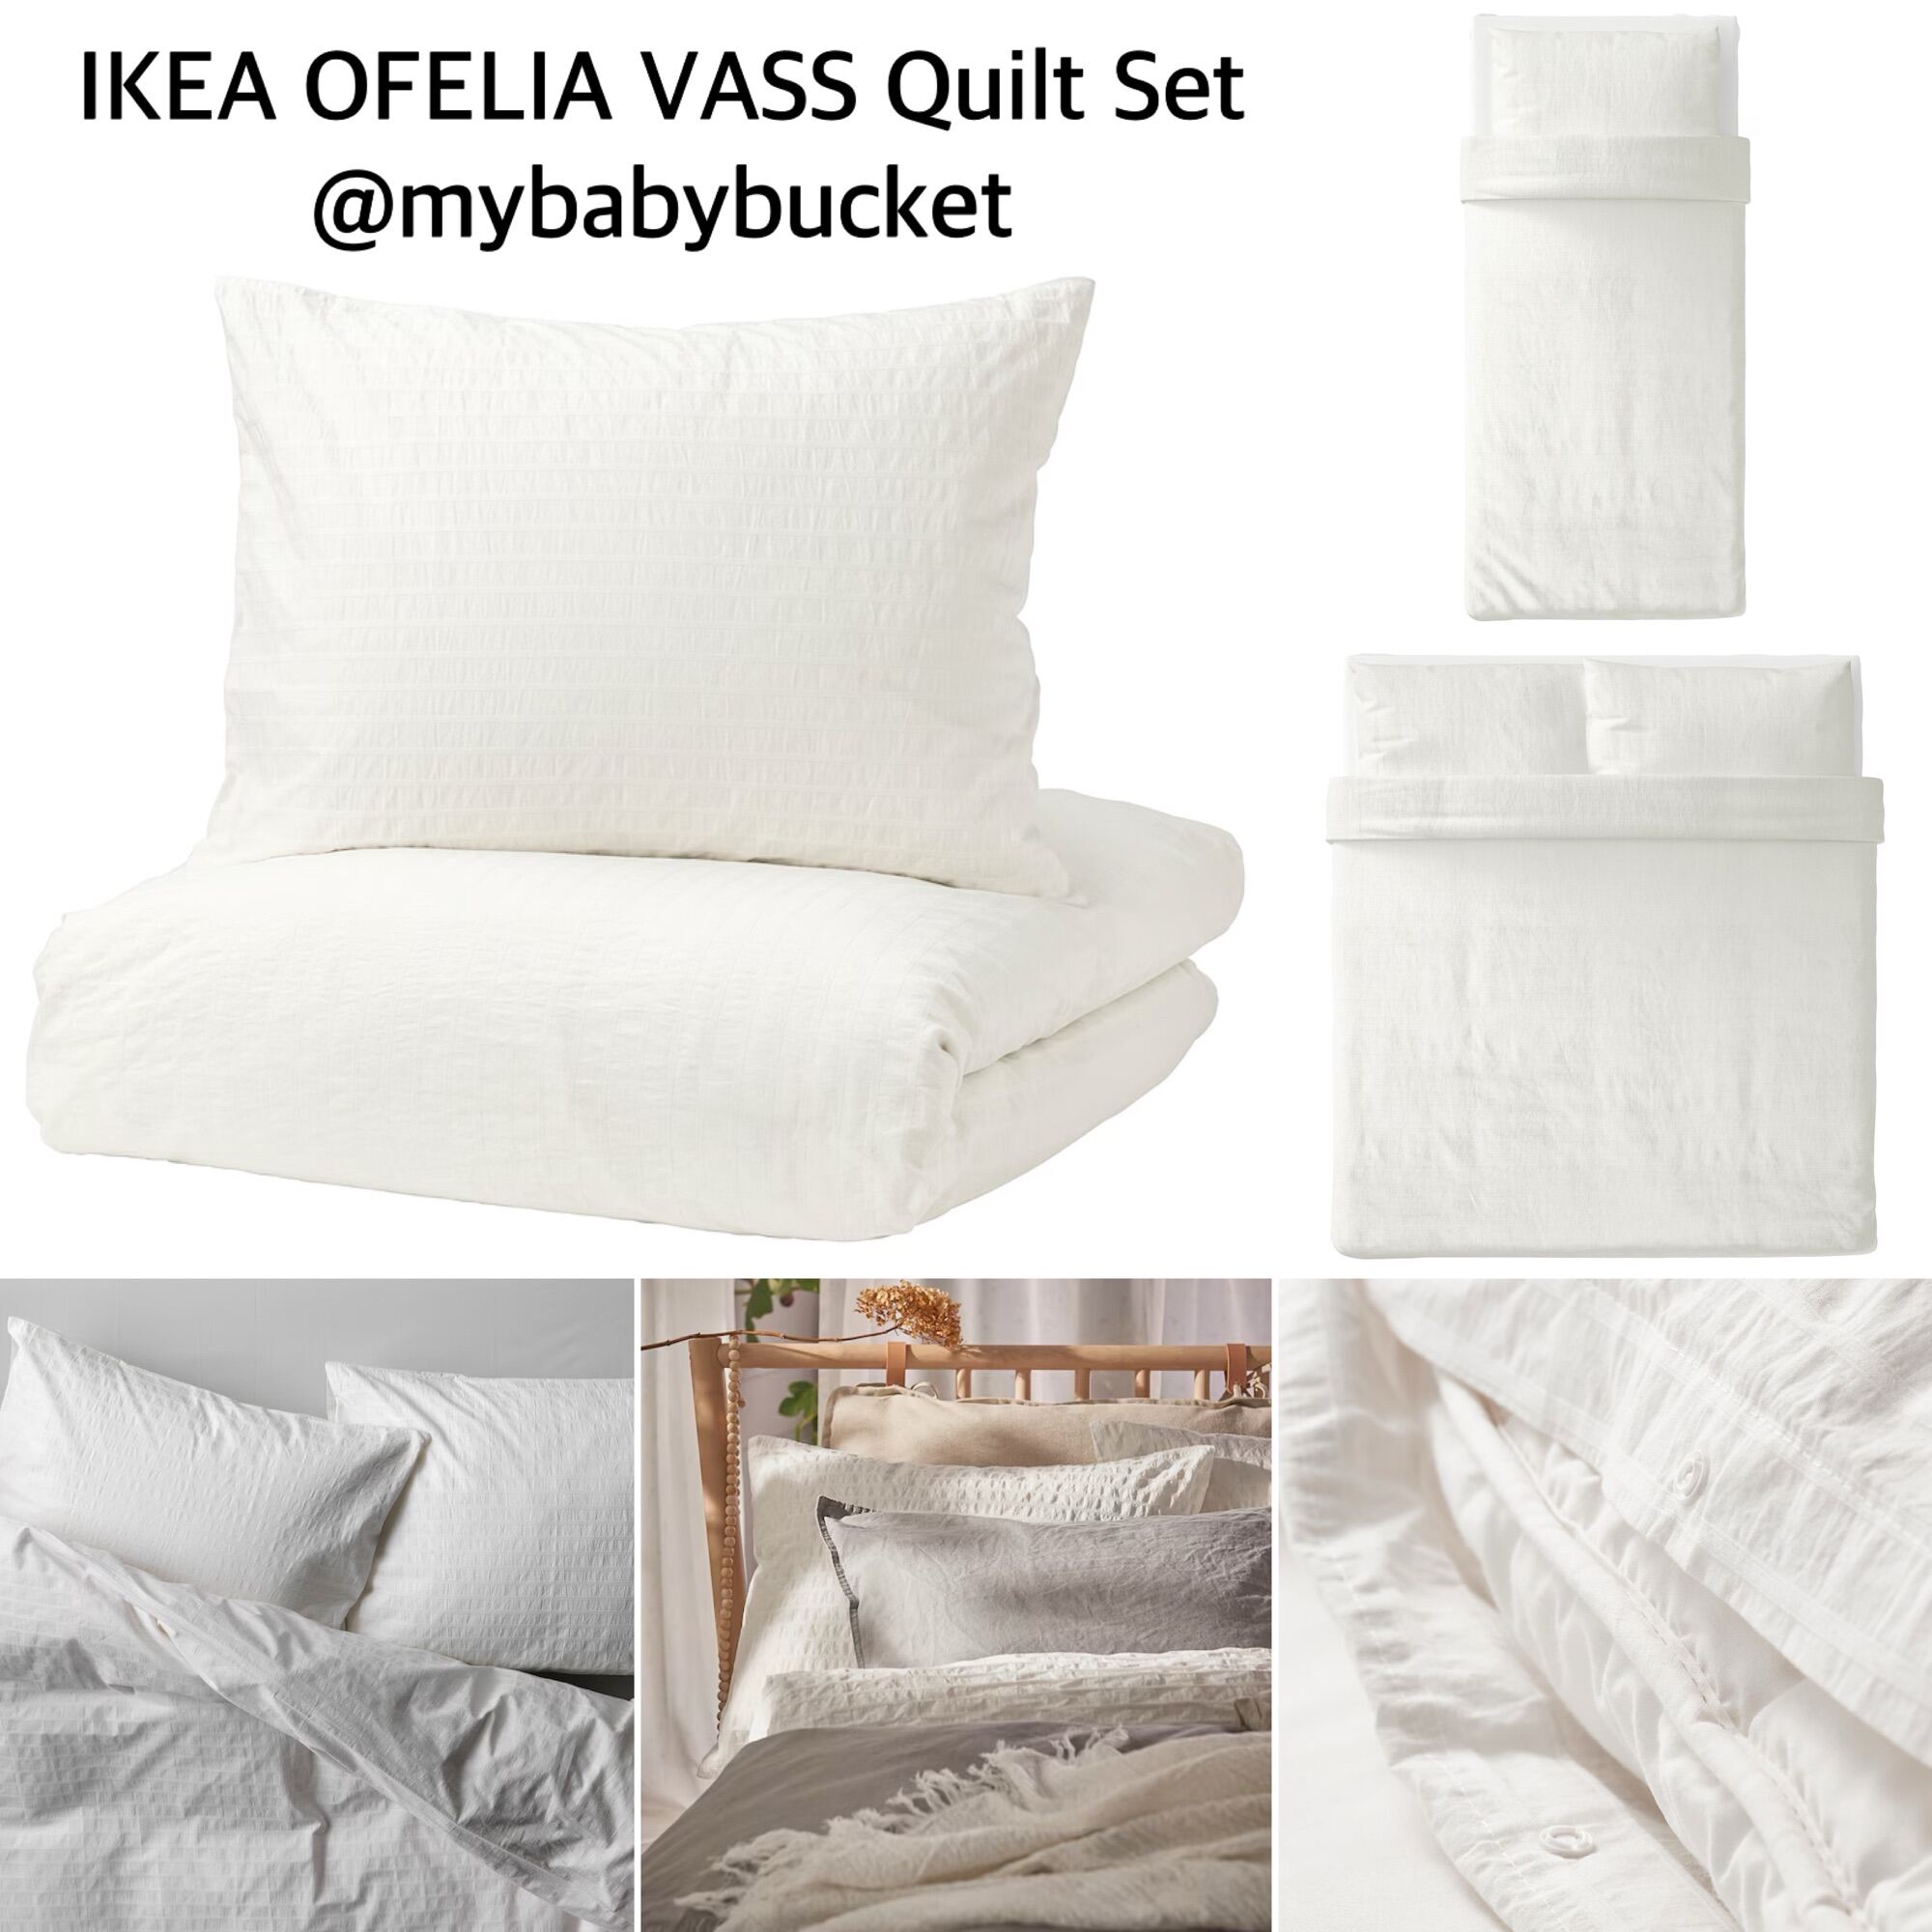 OFELIA VASS duvet cover and pillowcase(s), white, King - IKEA